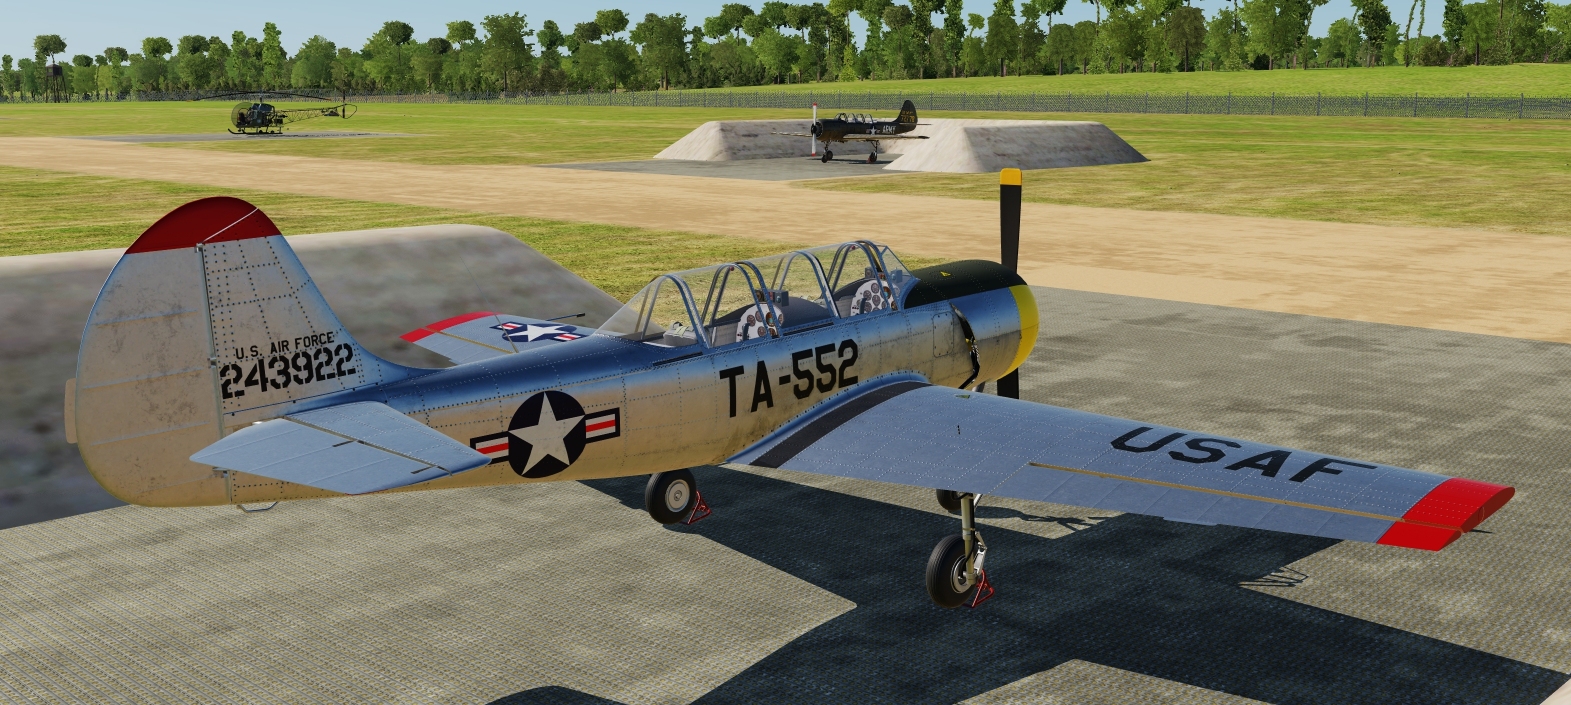 USAF LT-6D "Mosquito"